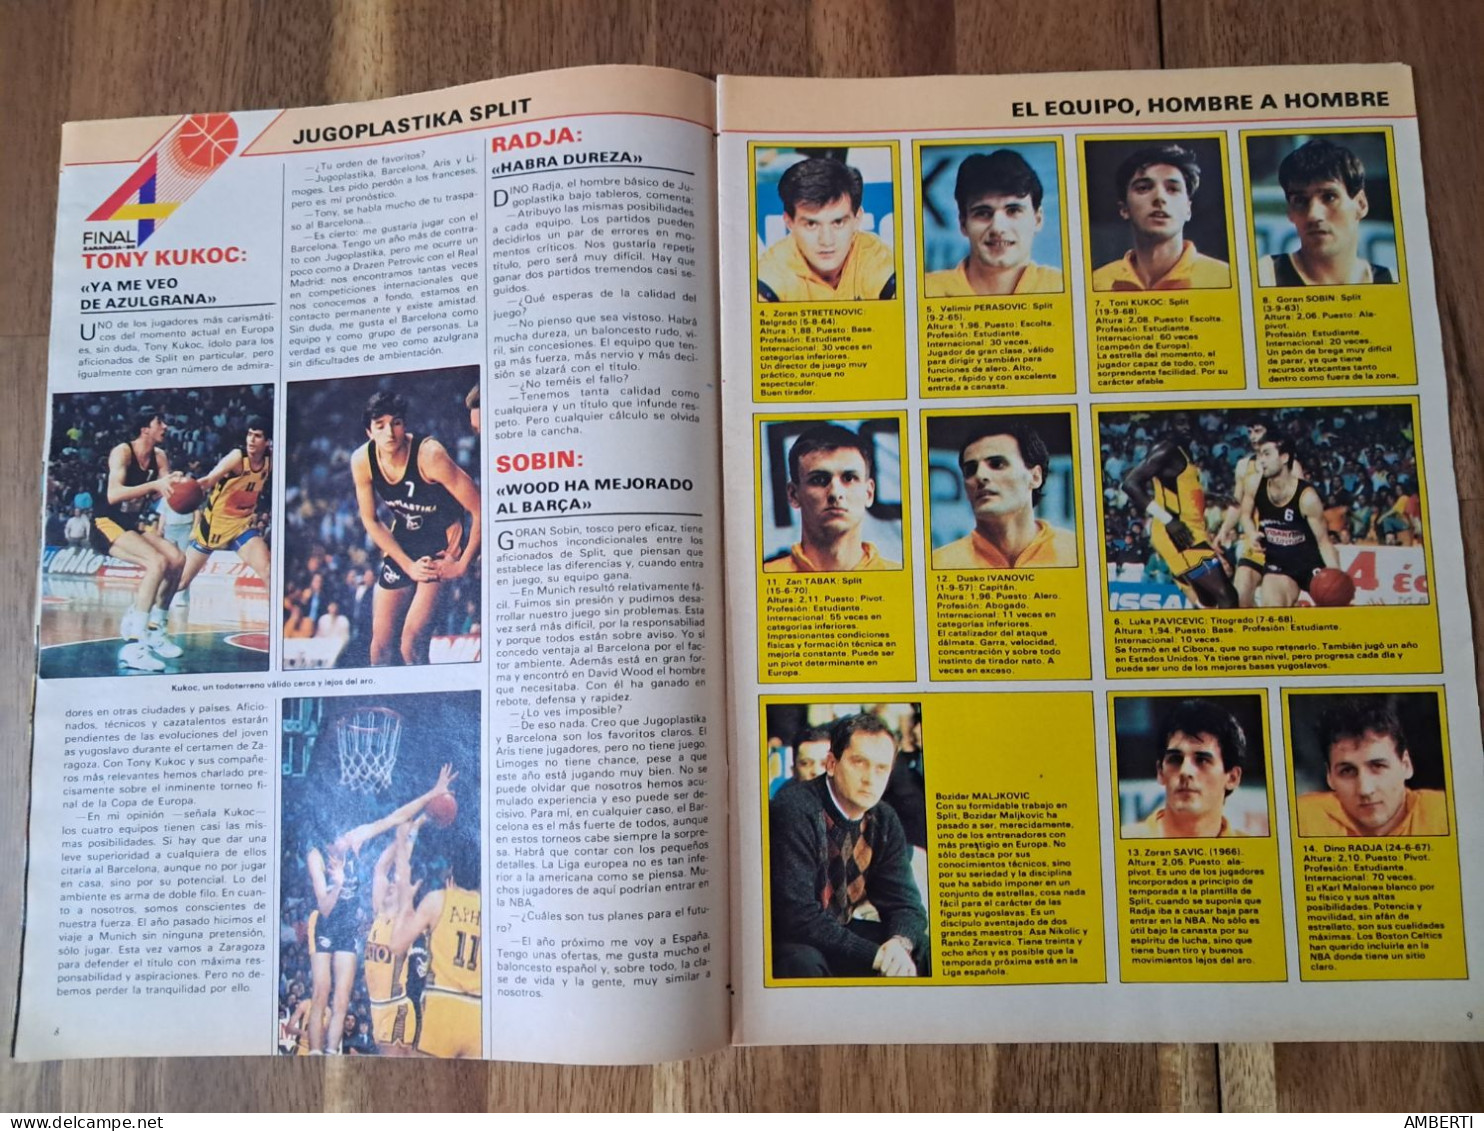 Copa Europa Baloncesto 89/90 As Color N218 1990 - Books